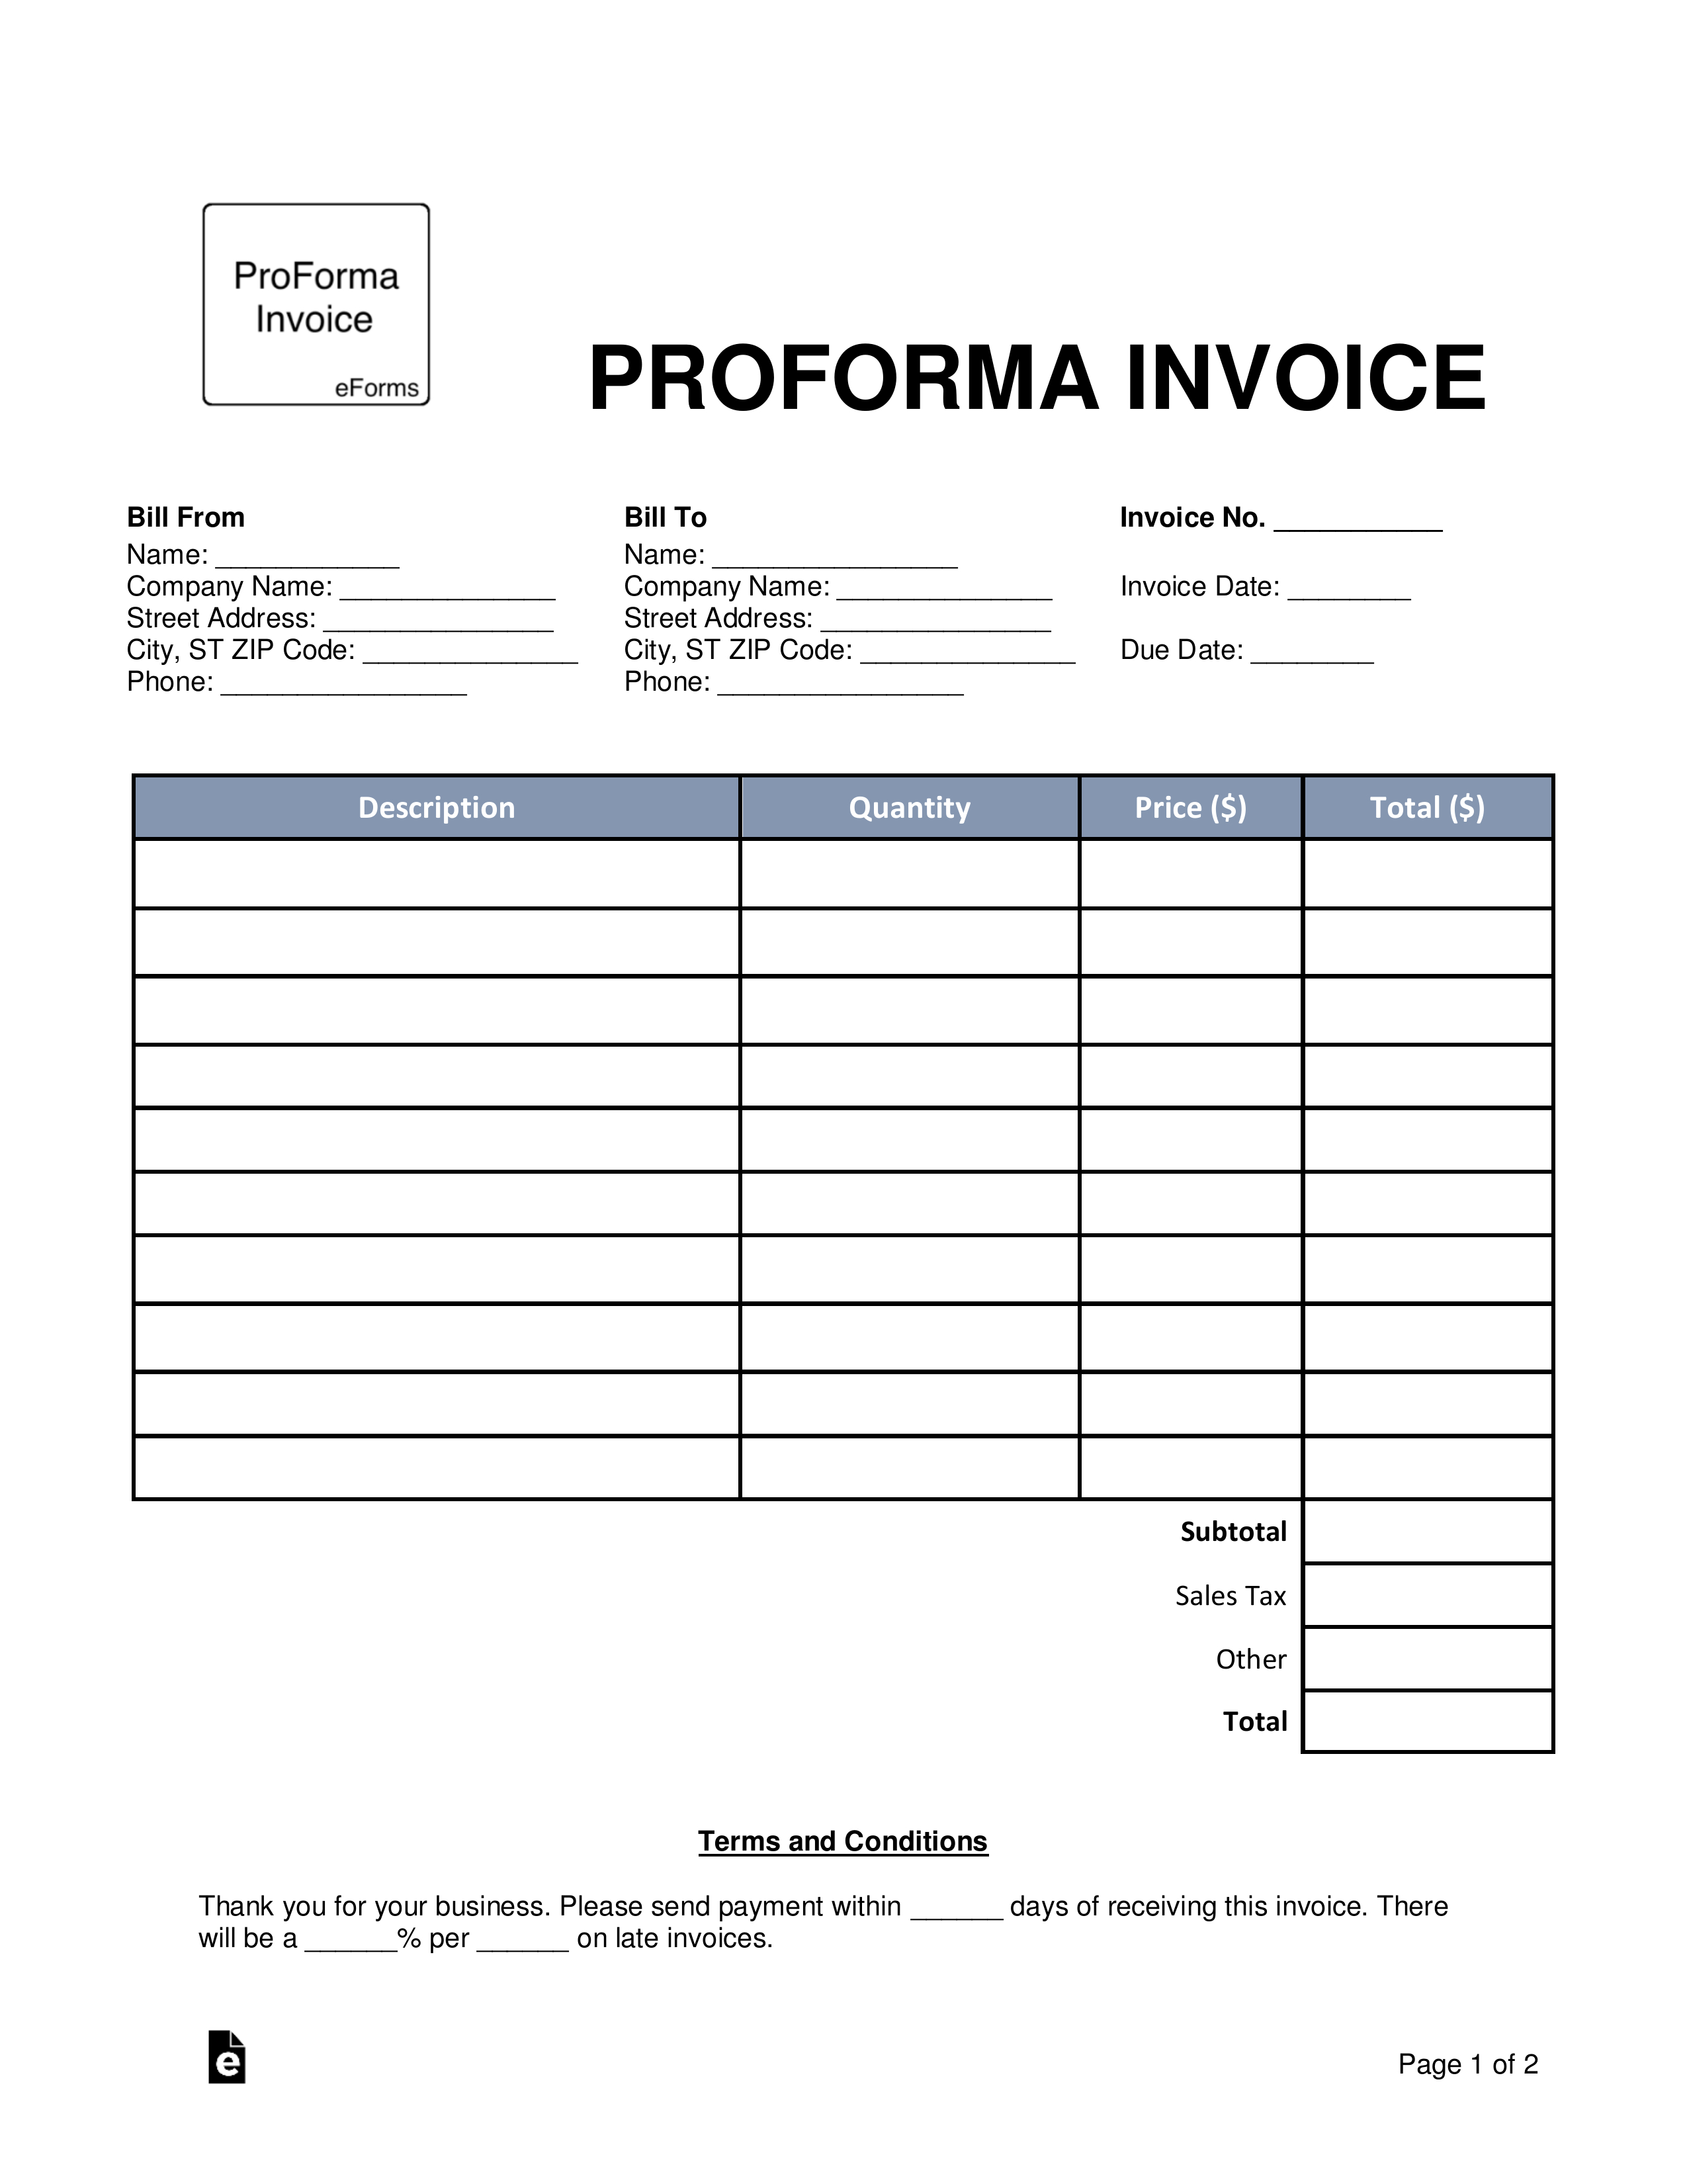 Free Proforma Invoice Template – Word | Pdf | Eforms – Free Inside Free Proforma Invoice Template Word